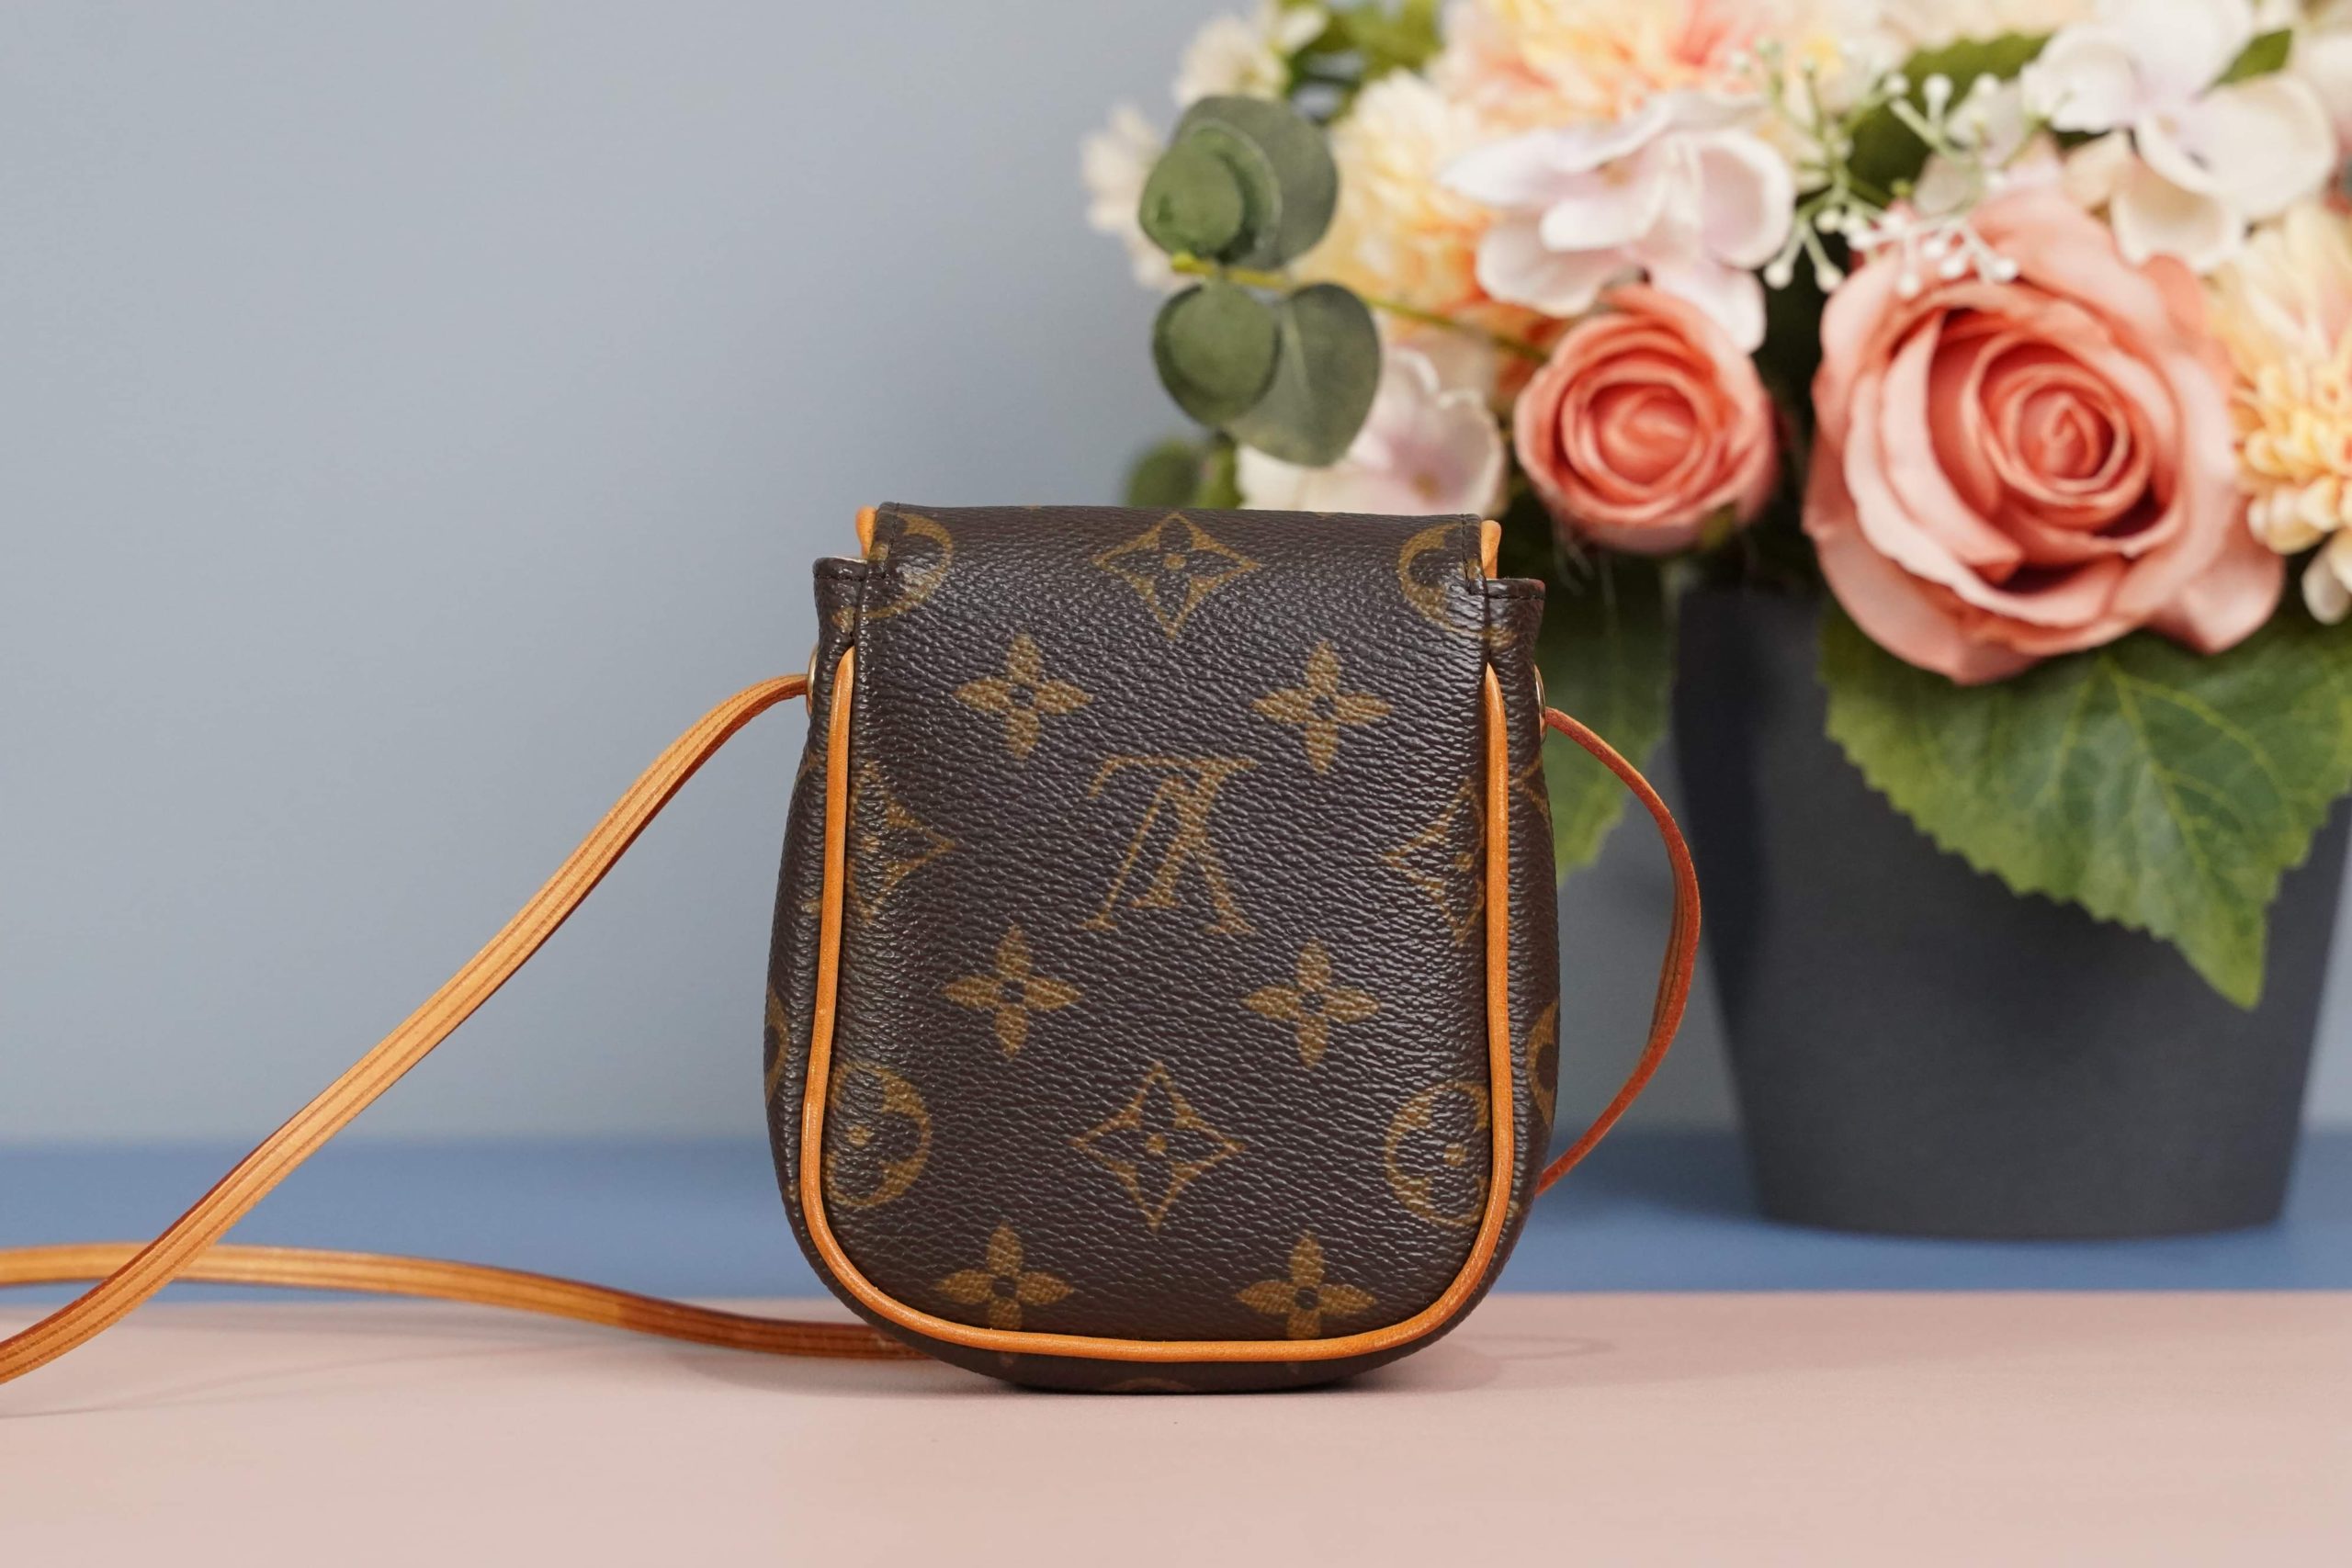 New in Box Louis Vuitton Crossbody Flower Pouchette Bag